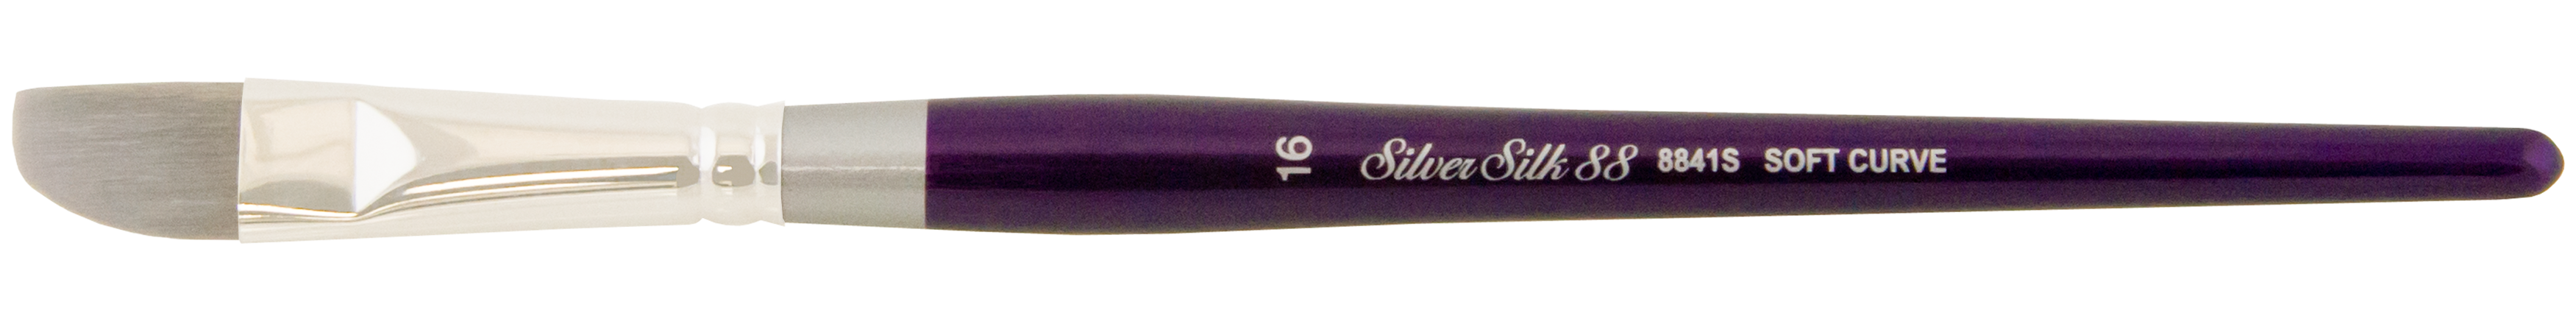 Silver Brush Silver Silk 88  SH 8841S Soft Curve